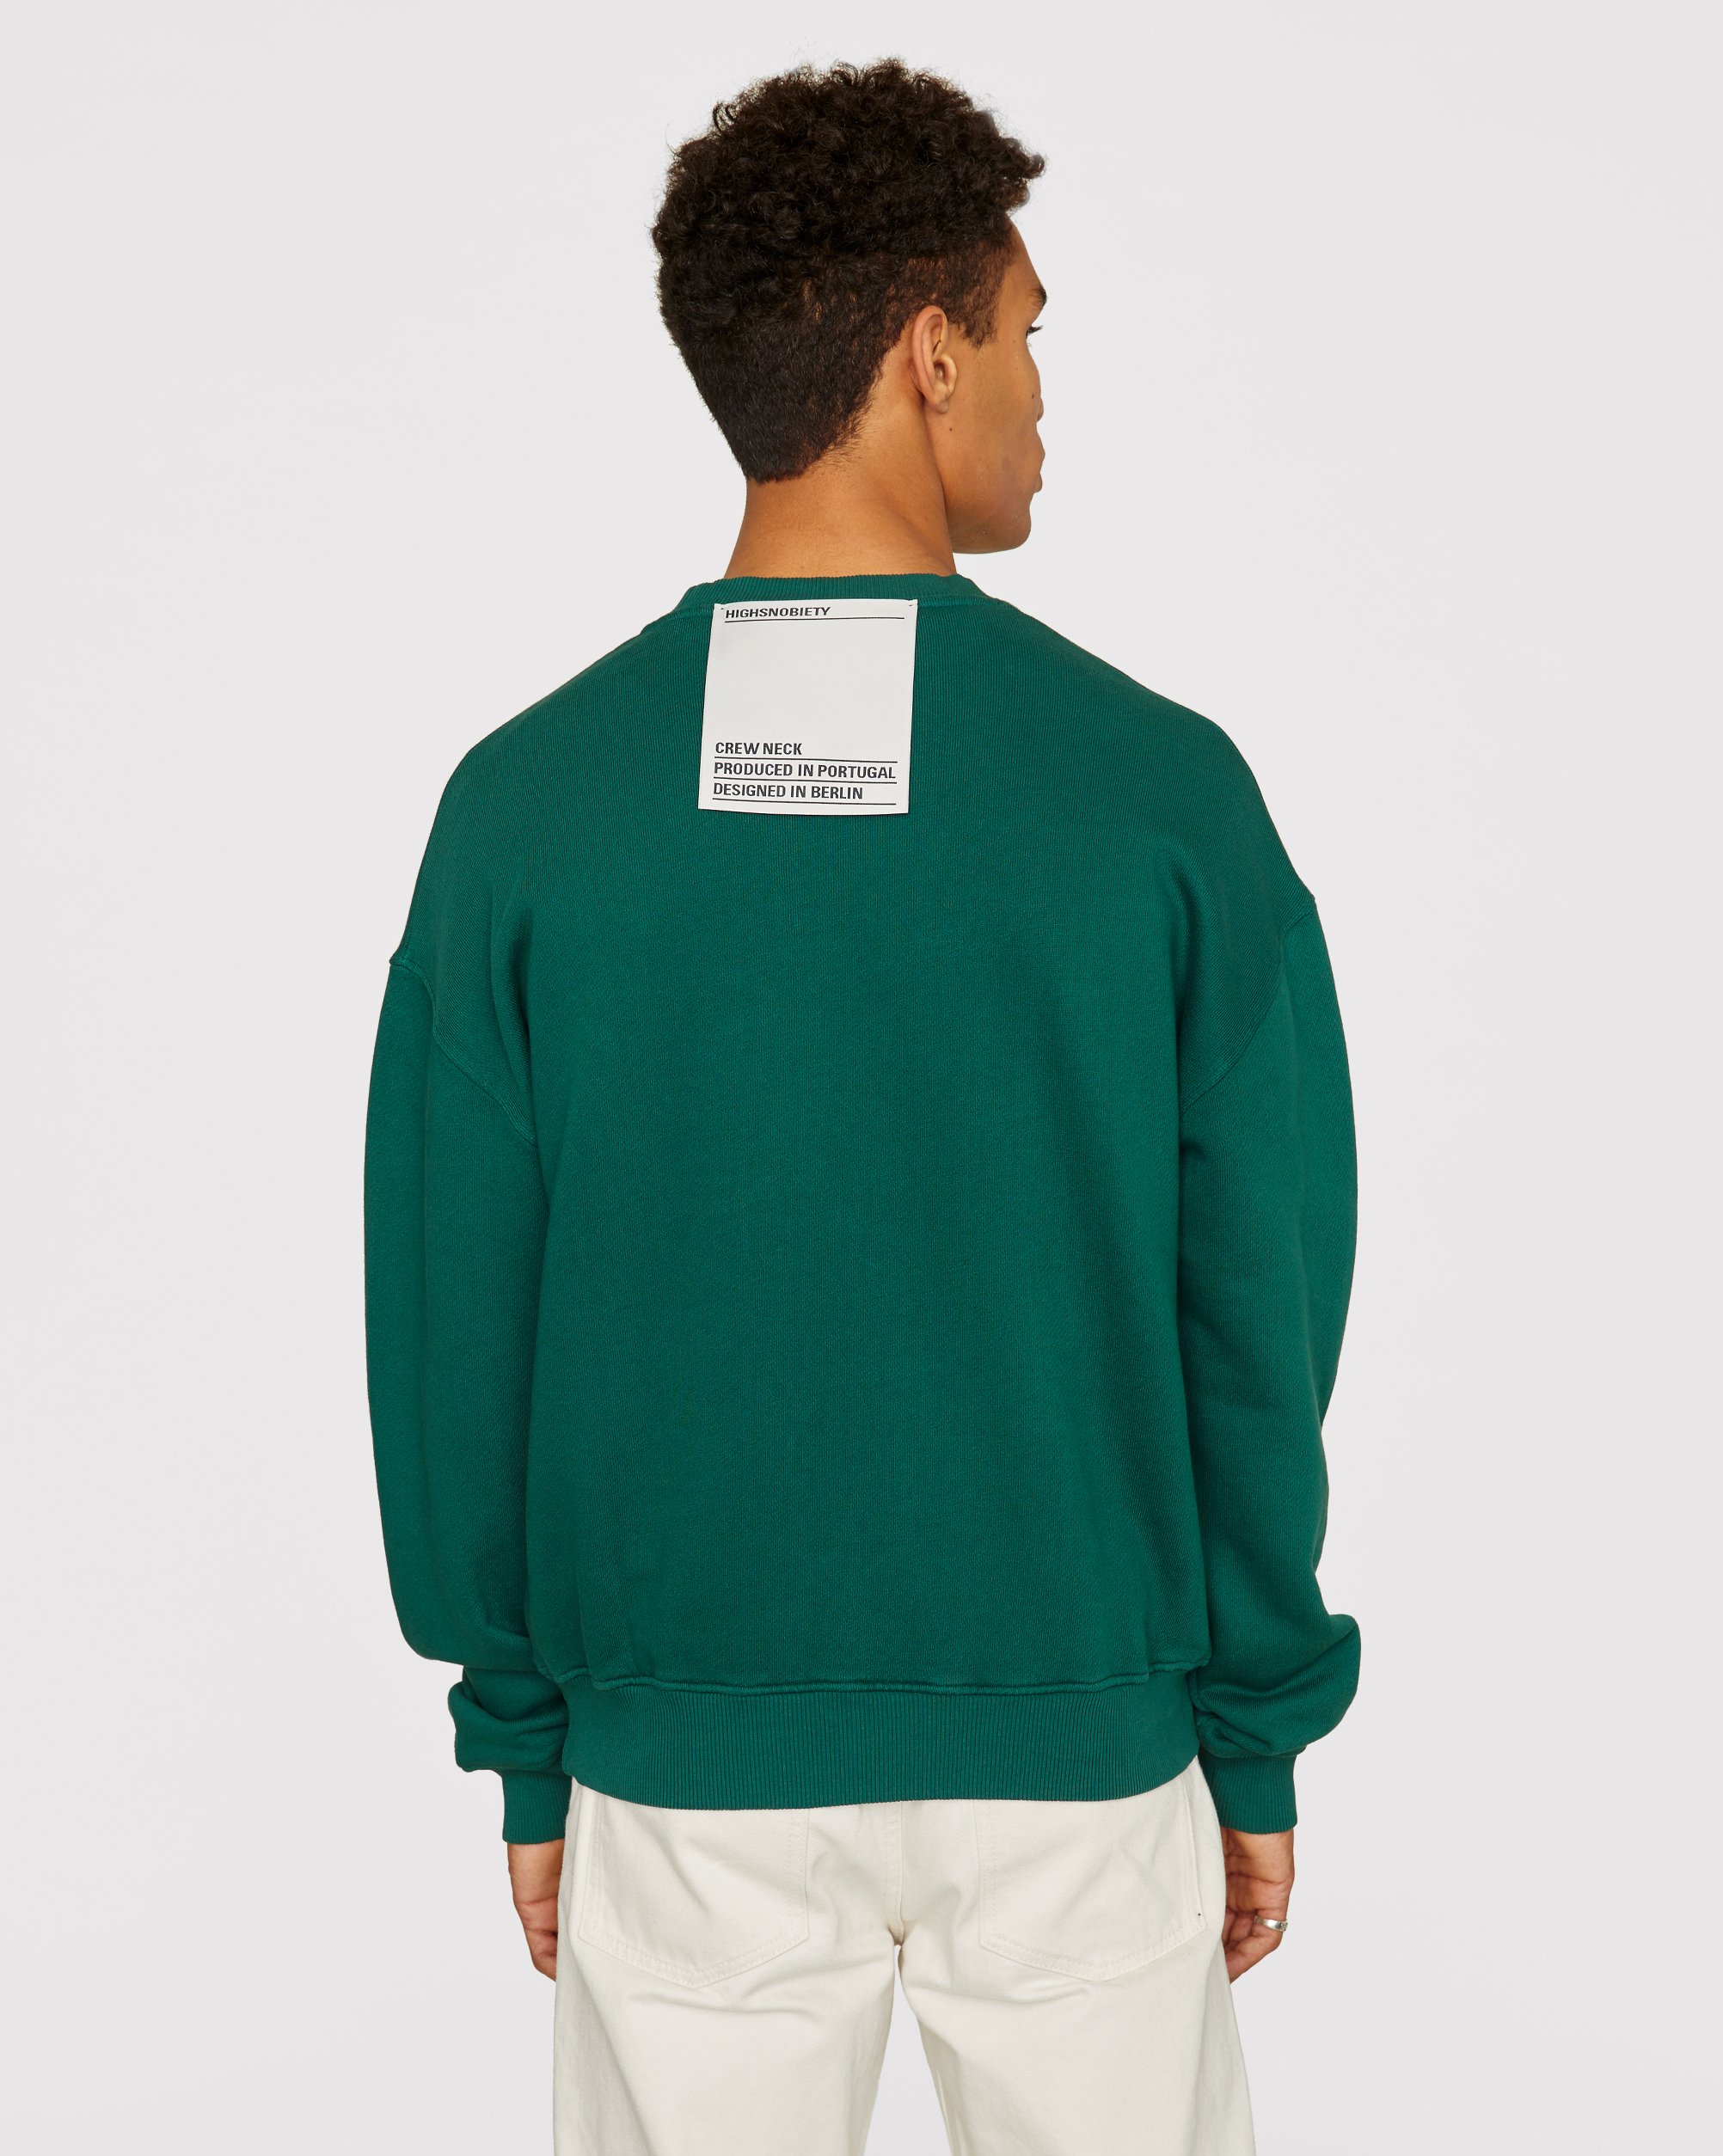 Highsnobiety - Staples Sweatshirt Green - Clothing - Green - Image 3